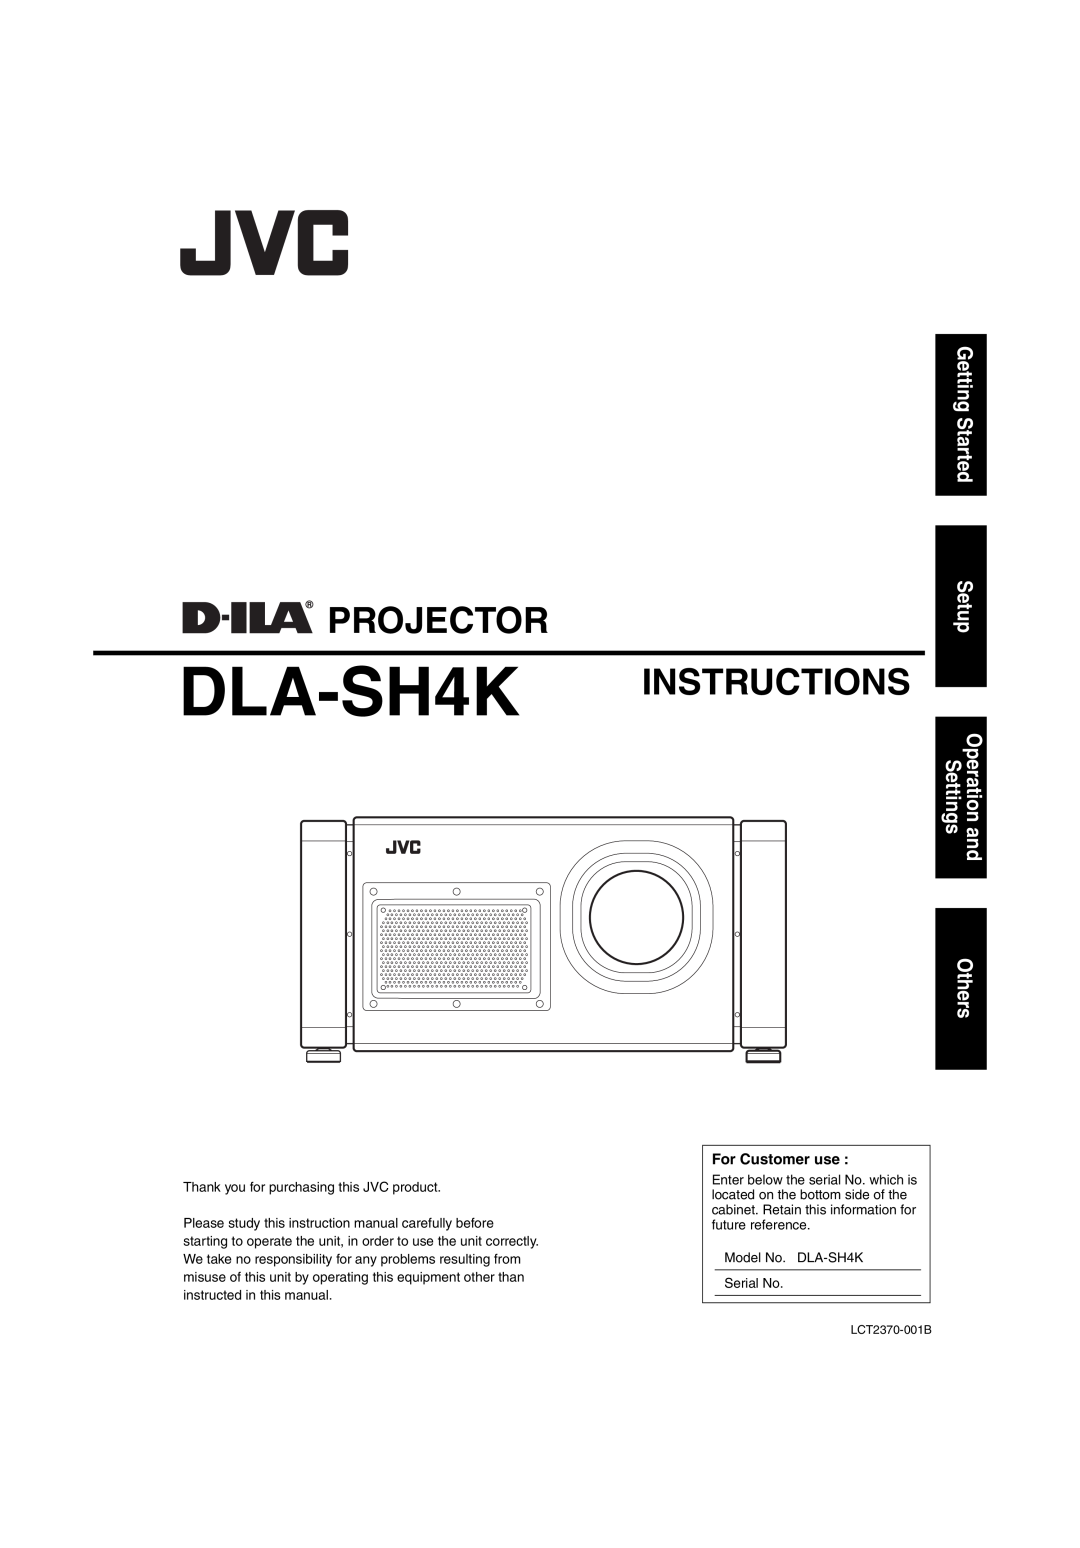 JVC instruction manual For Customer use, PROJECTOR DLA-SH4K INSTRUCTIONS, Getting Started Setup 